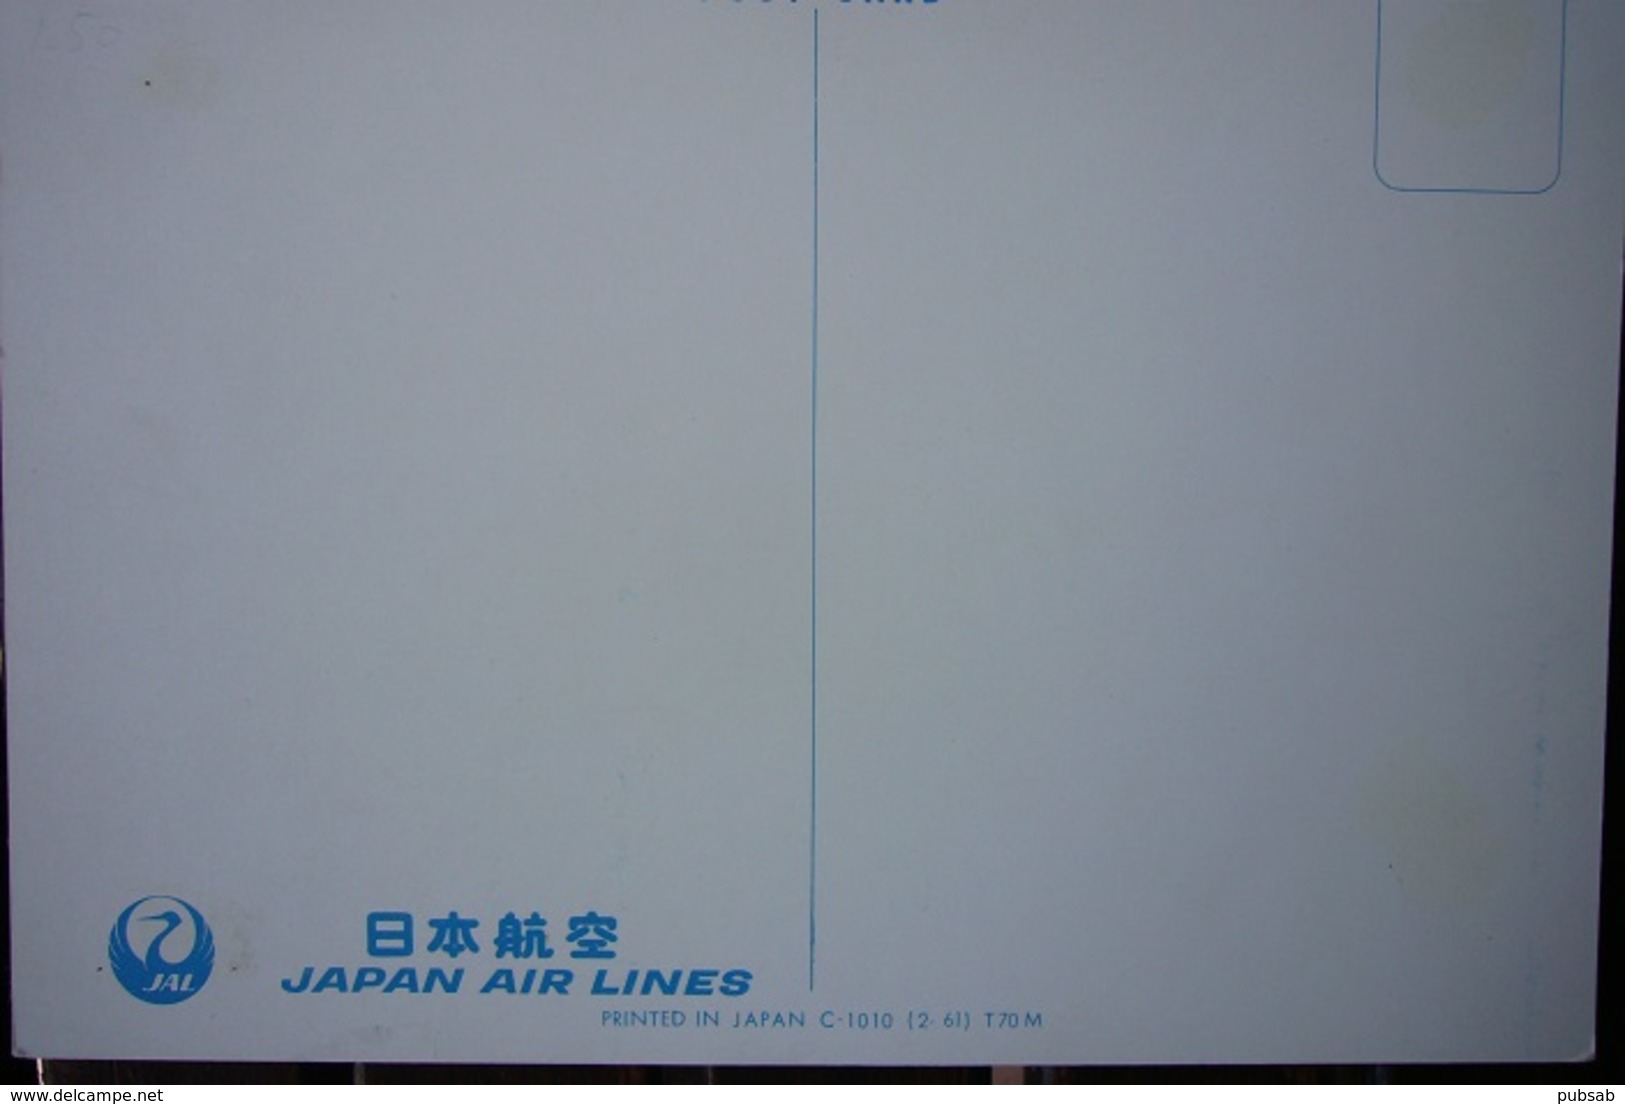 Avion / Airplane / Japan Air Lines  / Douglas DC-8 / Airline Issue - 1946-....: Modern Era